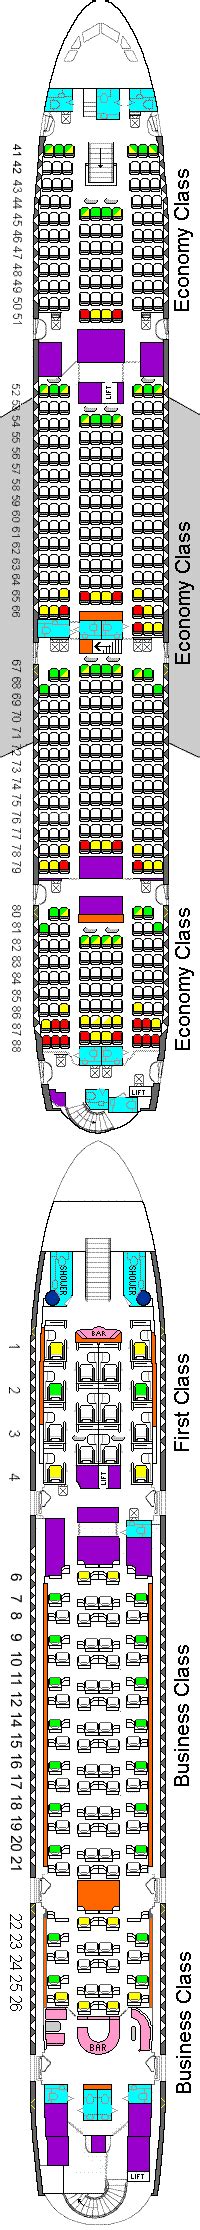 37 Seating Plan Of Emirates A380 800